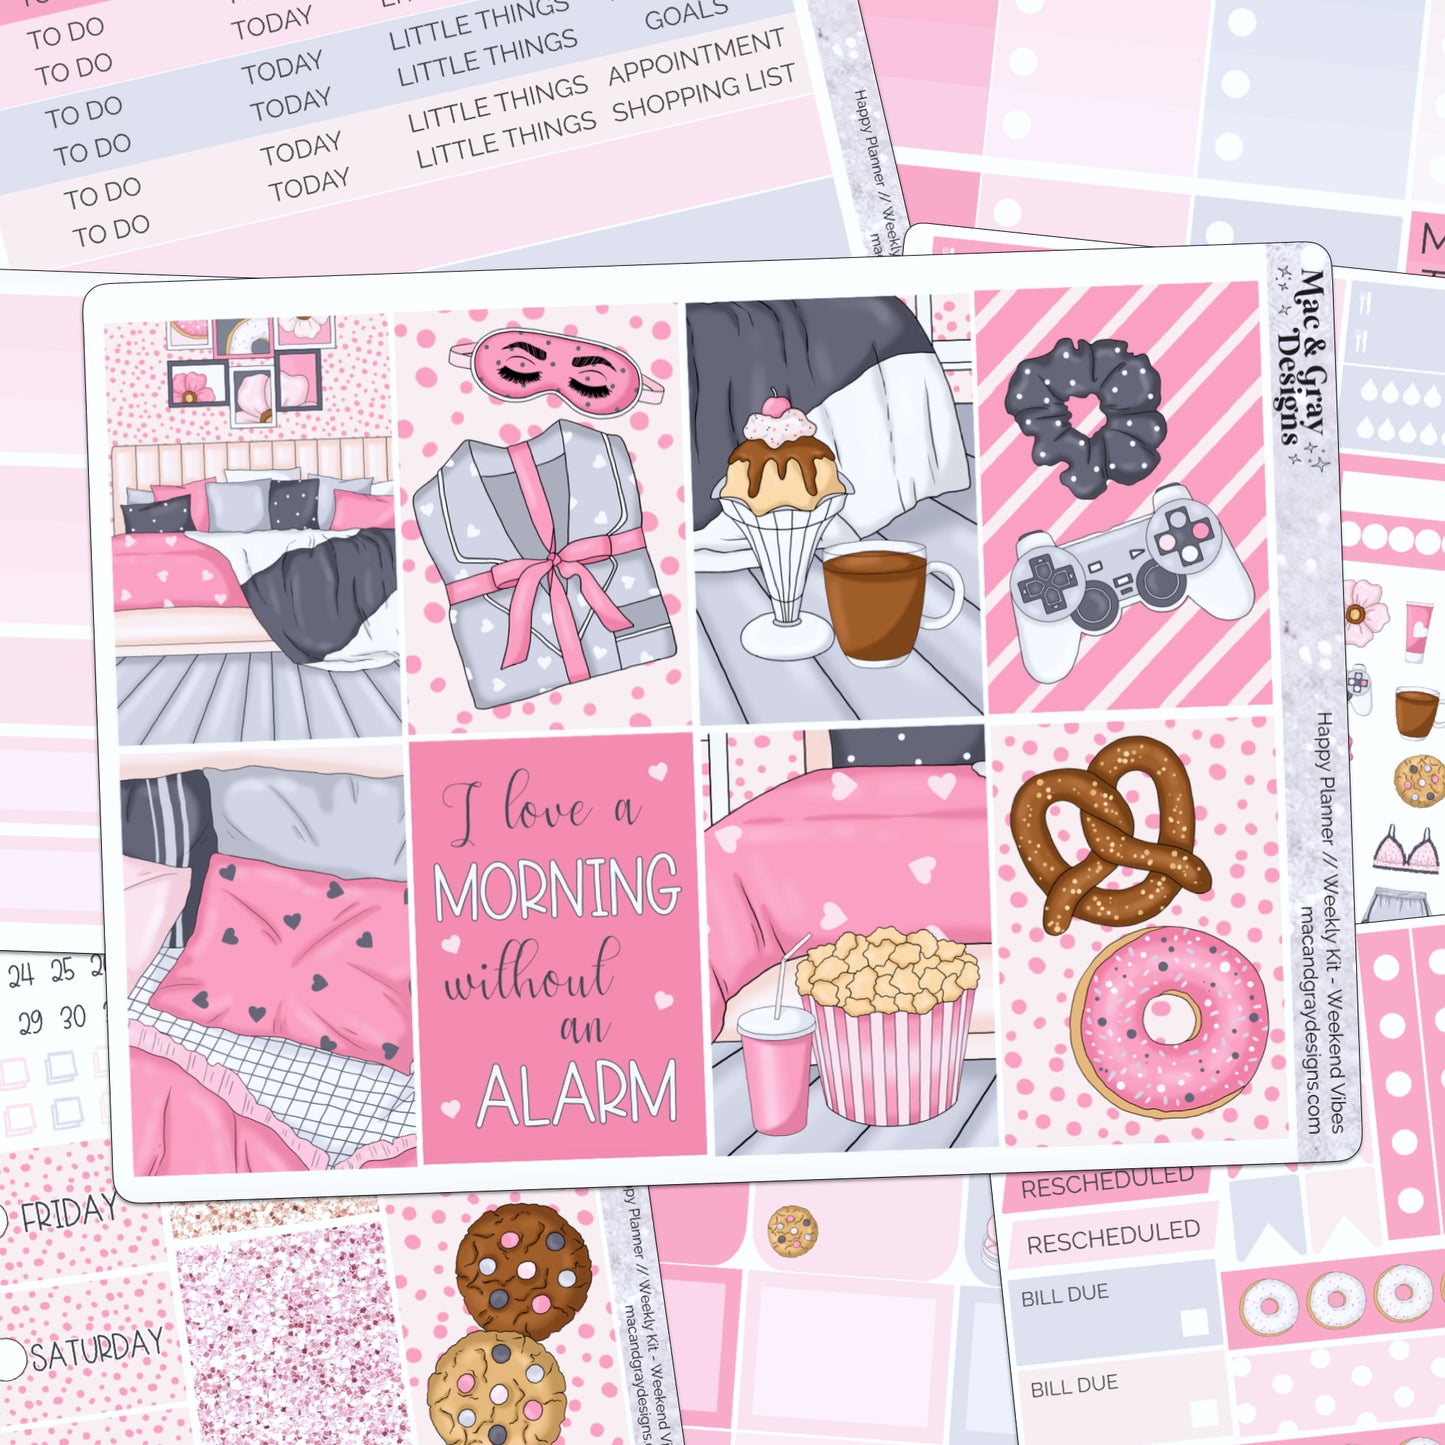 The Happy Planner MINI PLANNER BABE Sticker Book journal or calendar